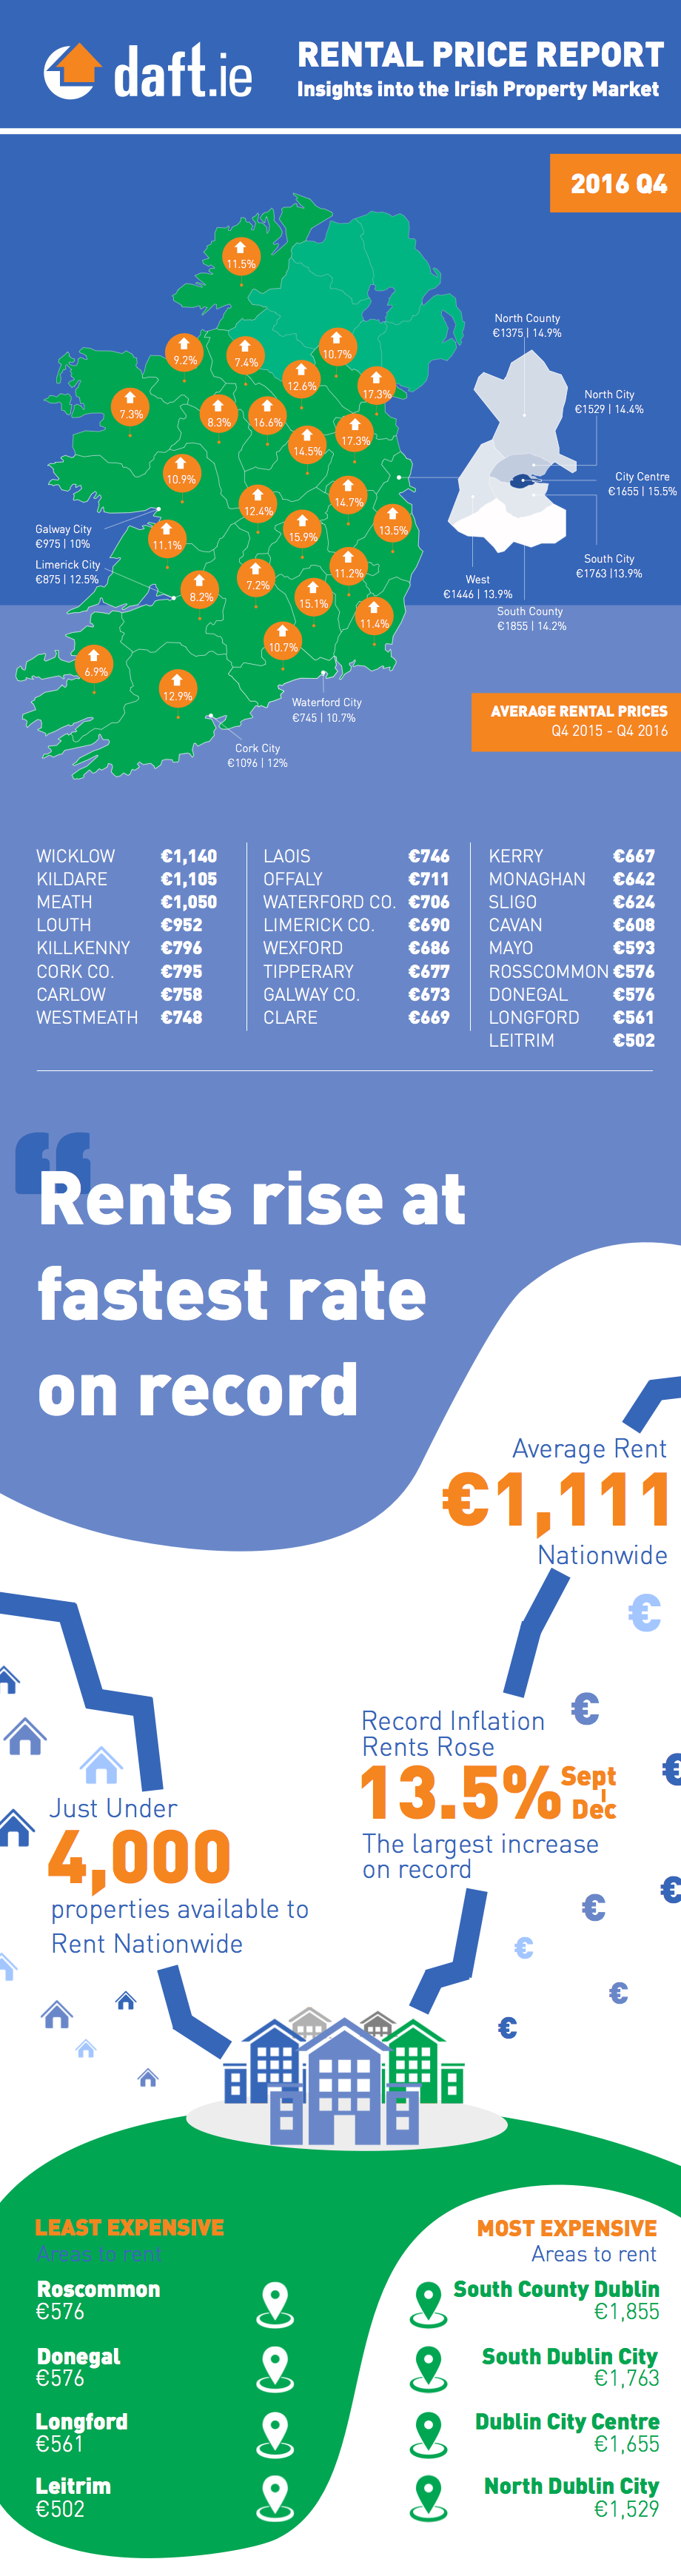 Daft.ie Rental Report: Q4 2016 Infographic